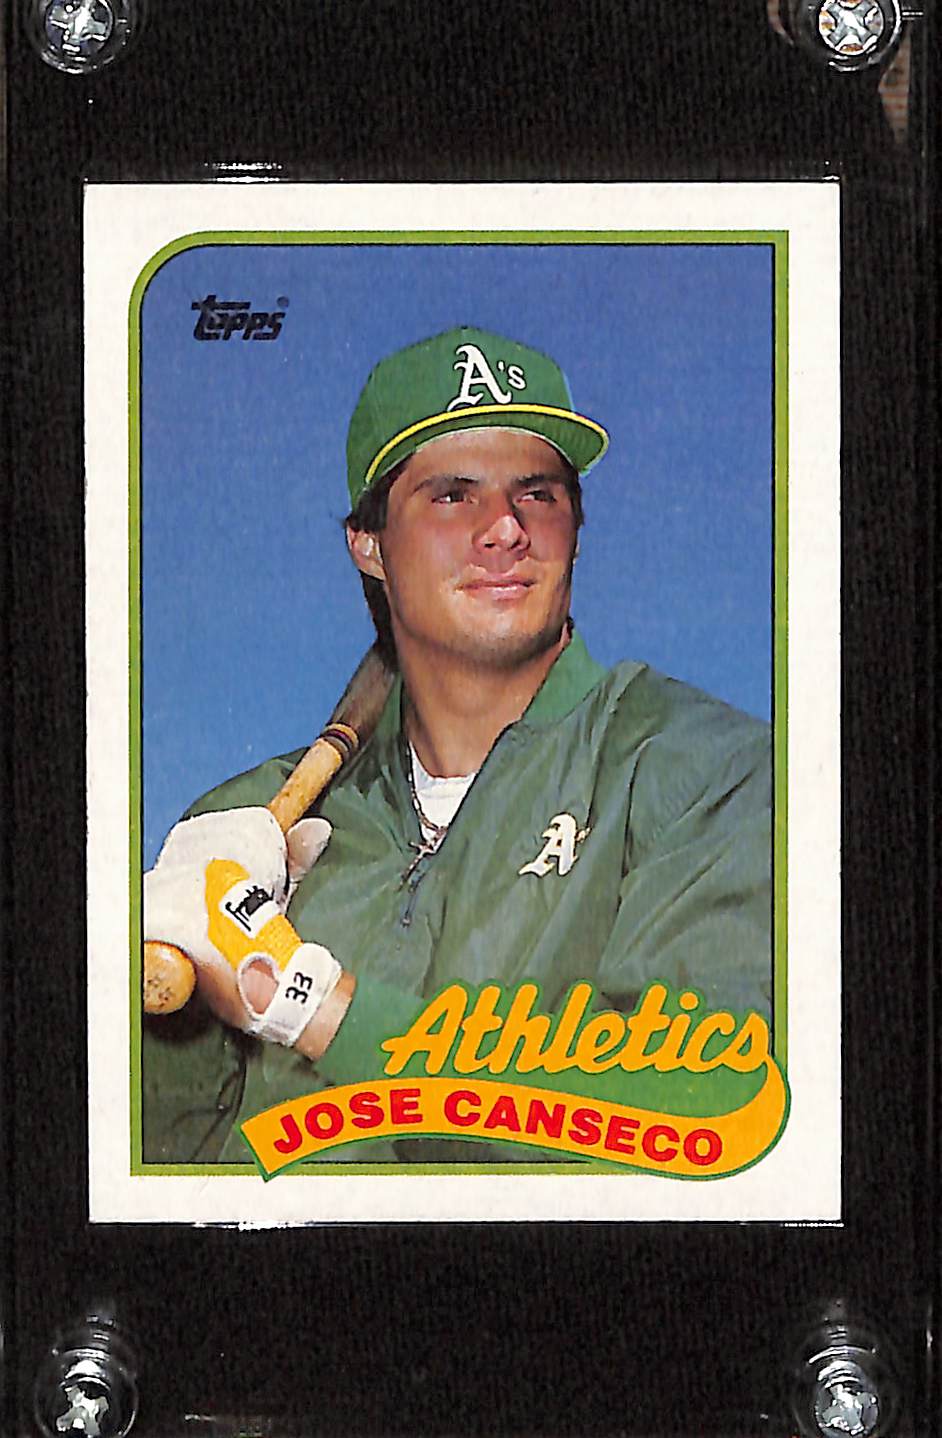 FIINR Baseball Card 1989 Topps Jose Canseco Baseball Error Card #500 - Mint Condition Error Card